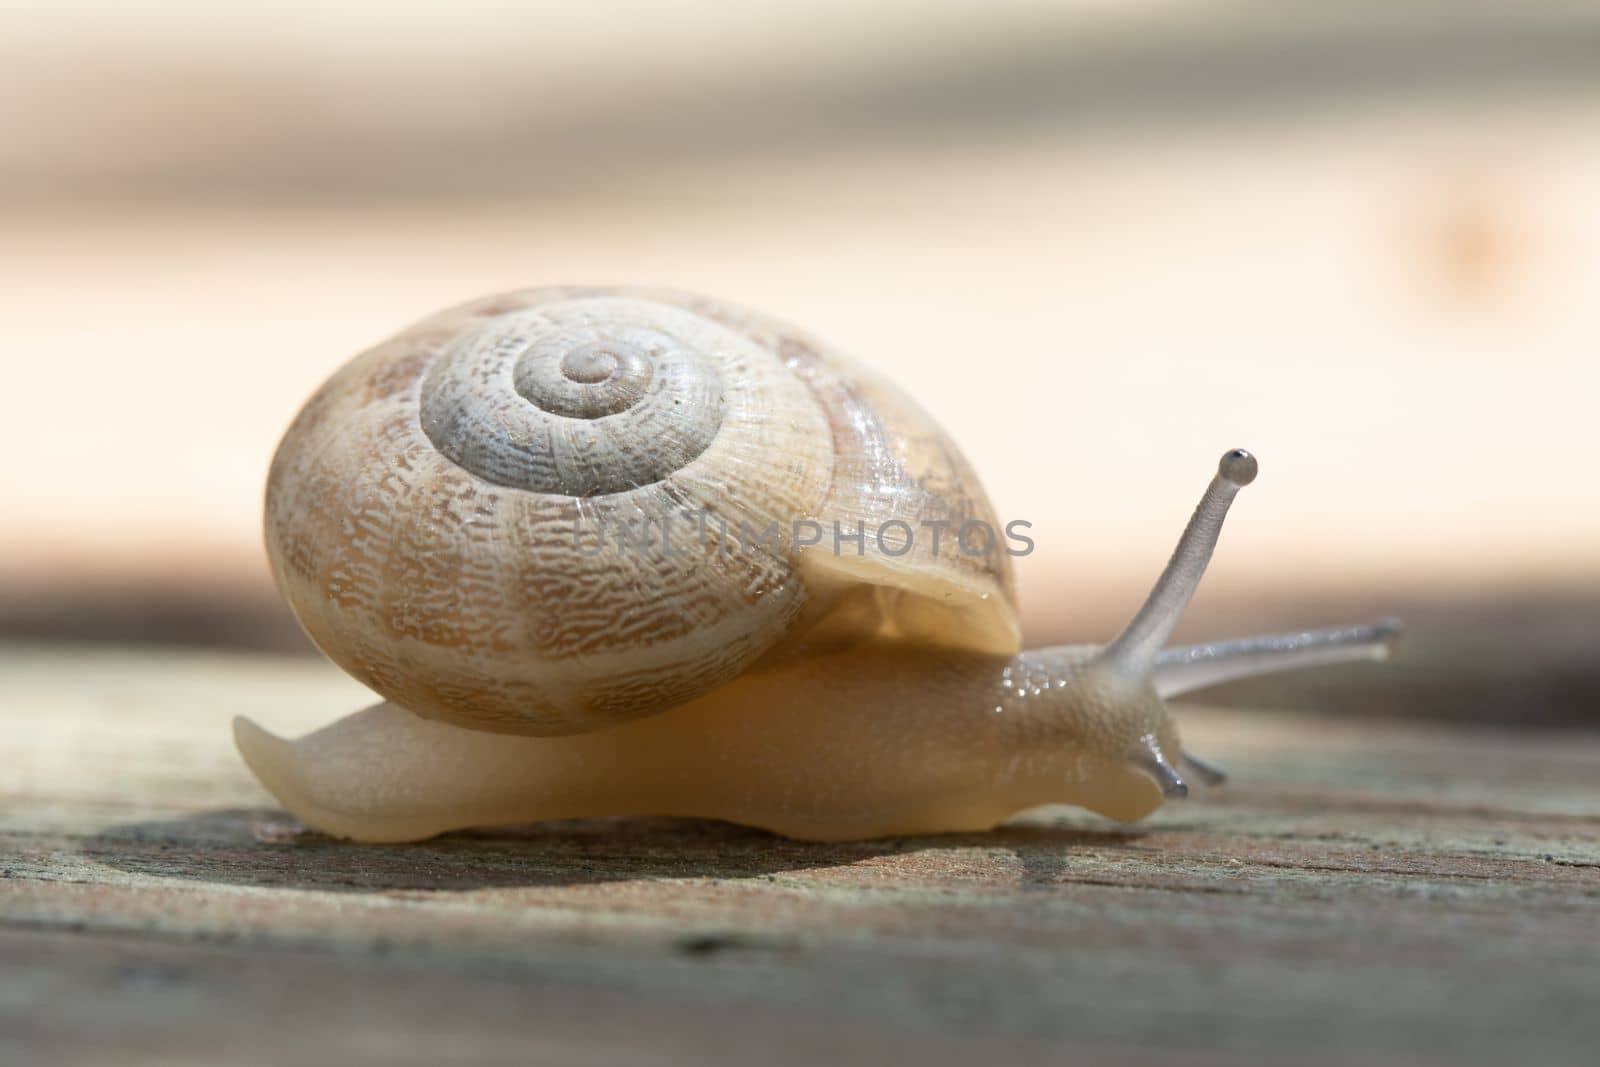 The common garden snail. Helix aspersa